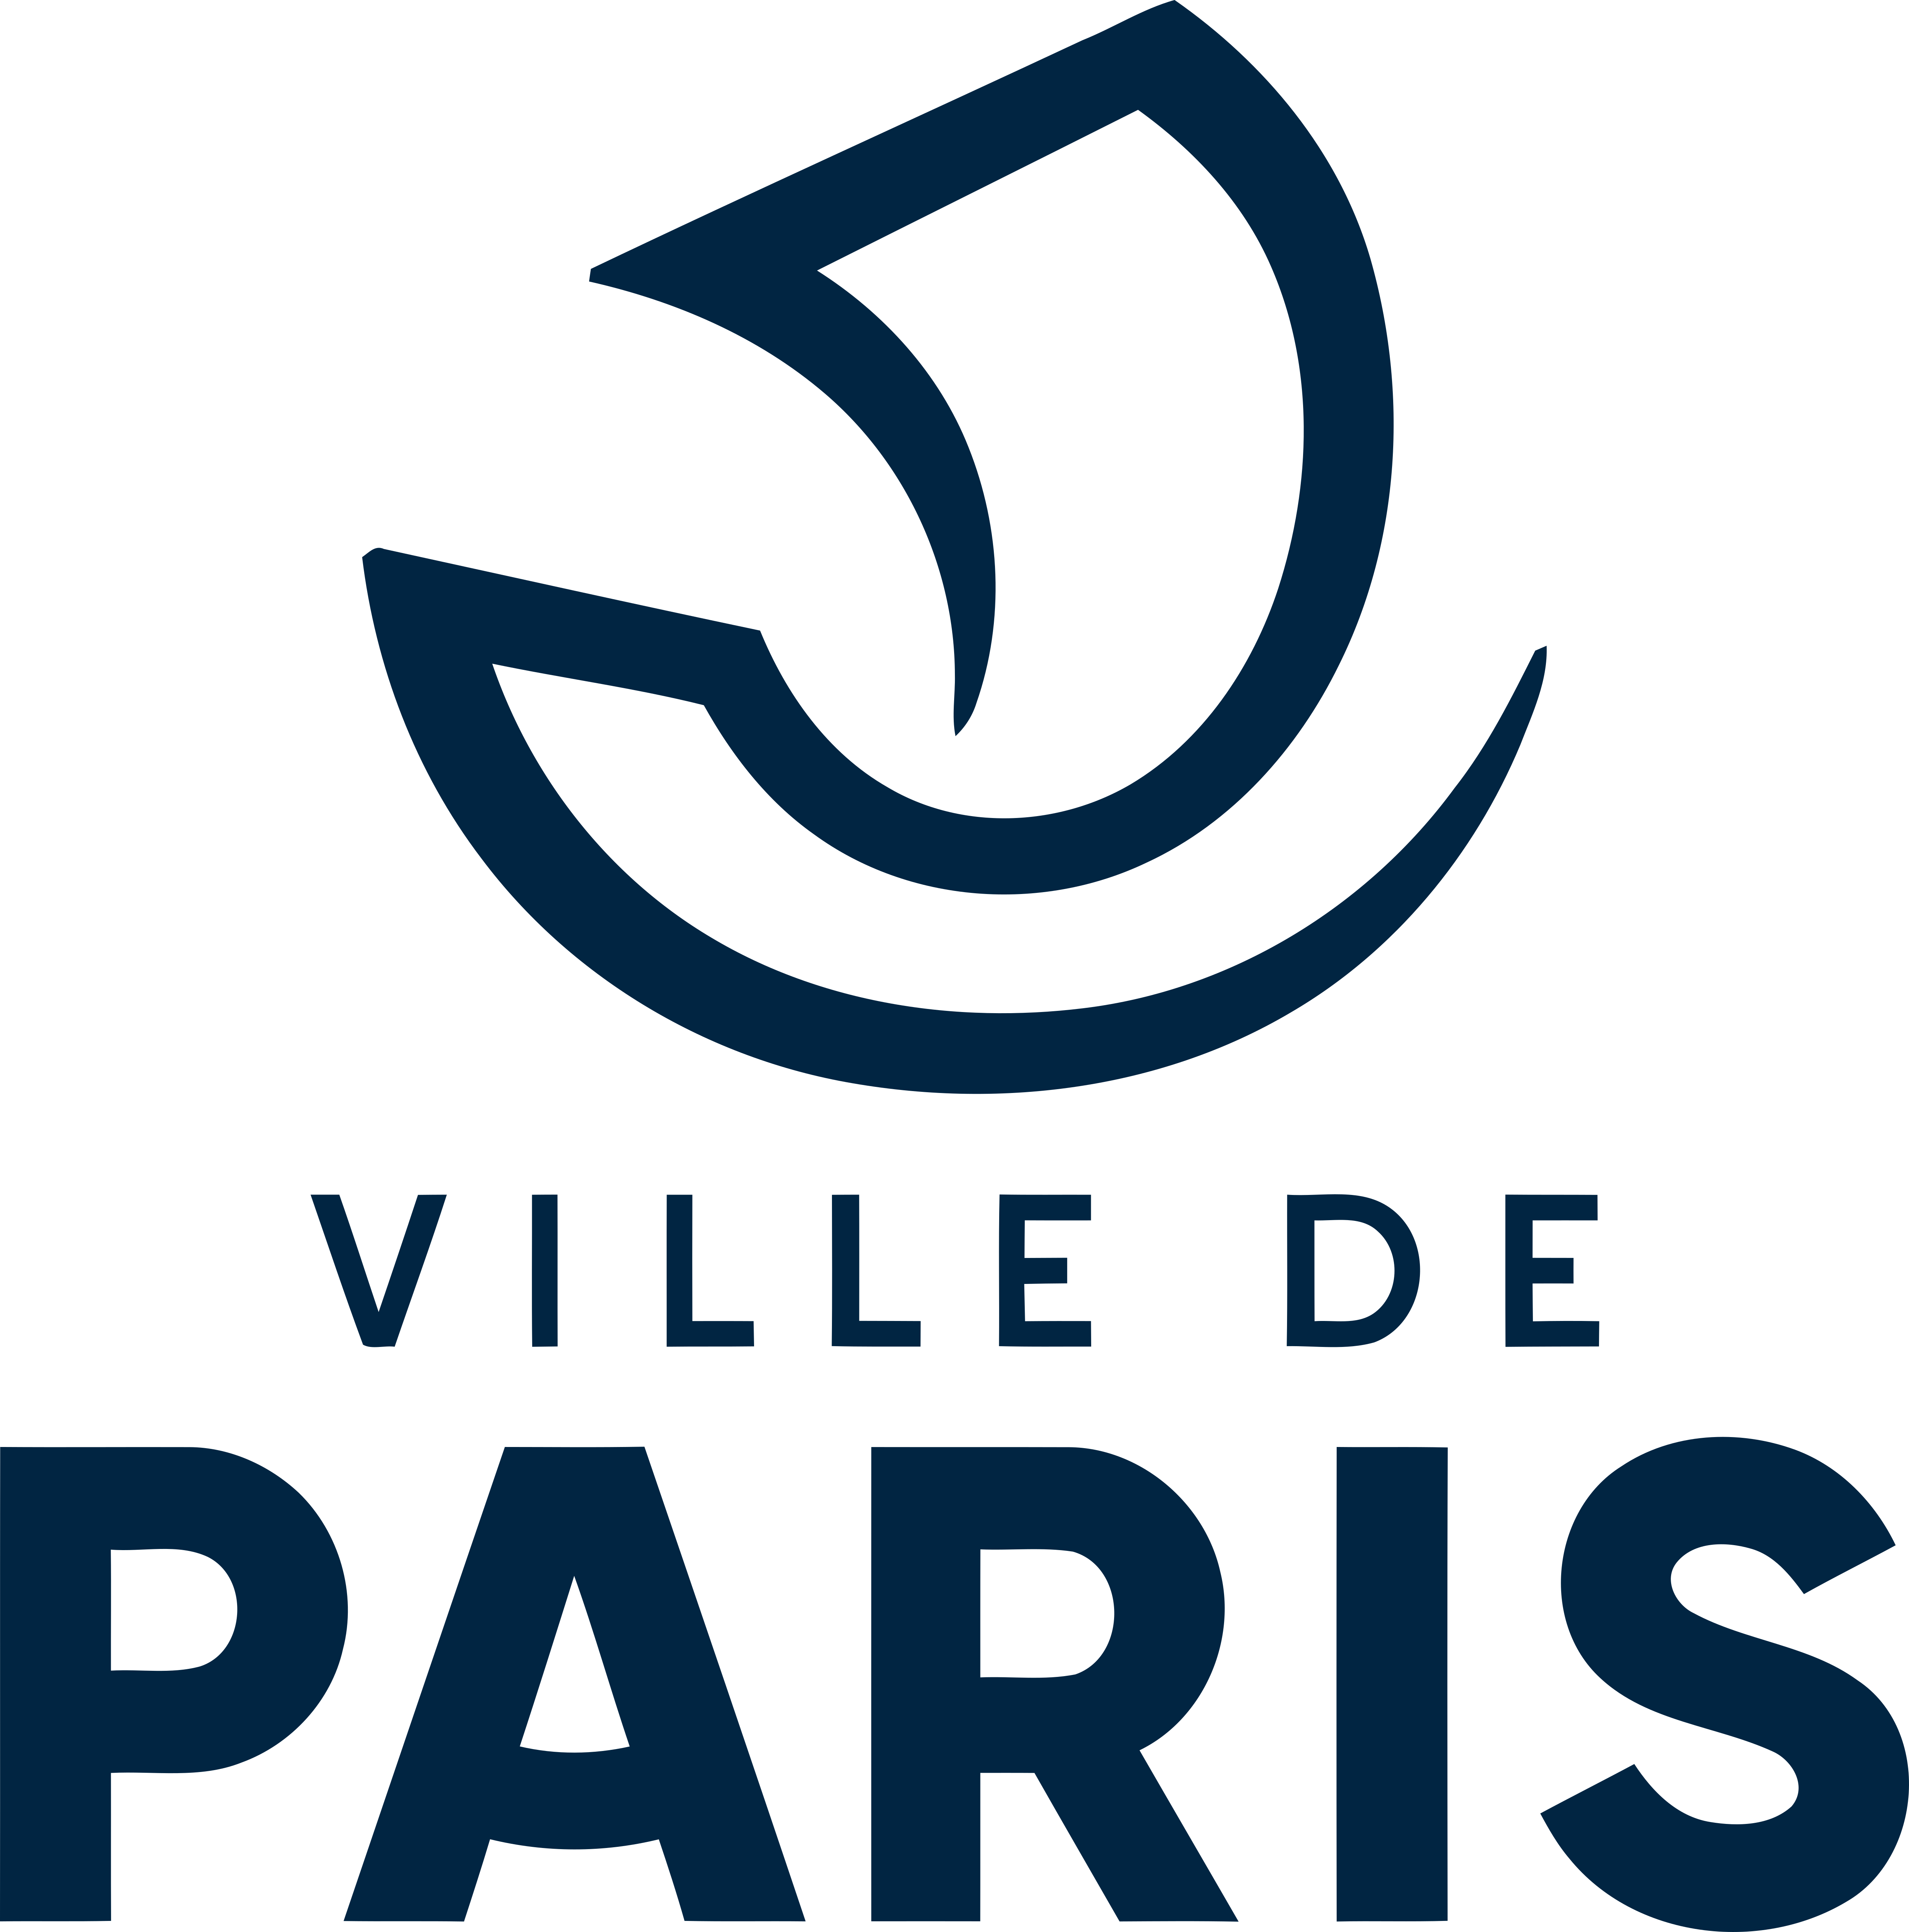 Paris 2024 Logo Png And Vector Logo Download Images